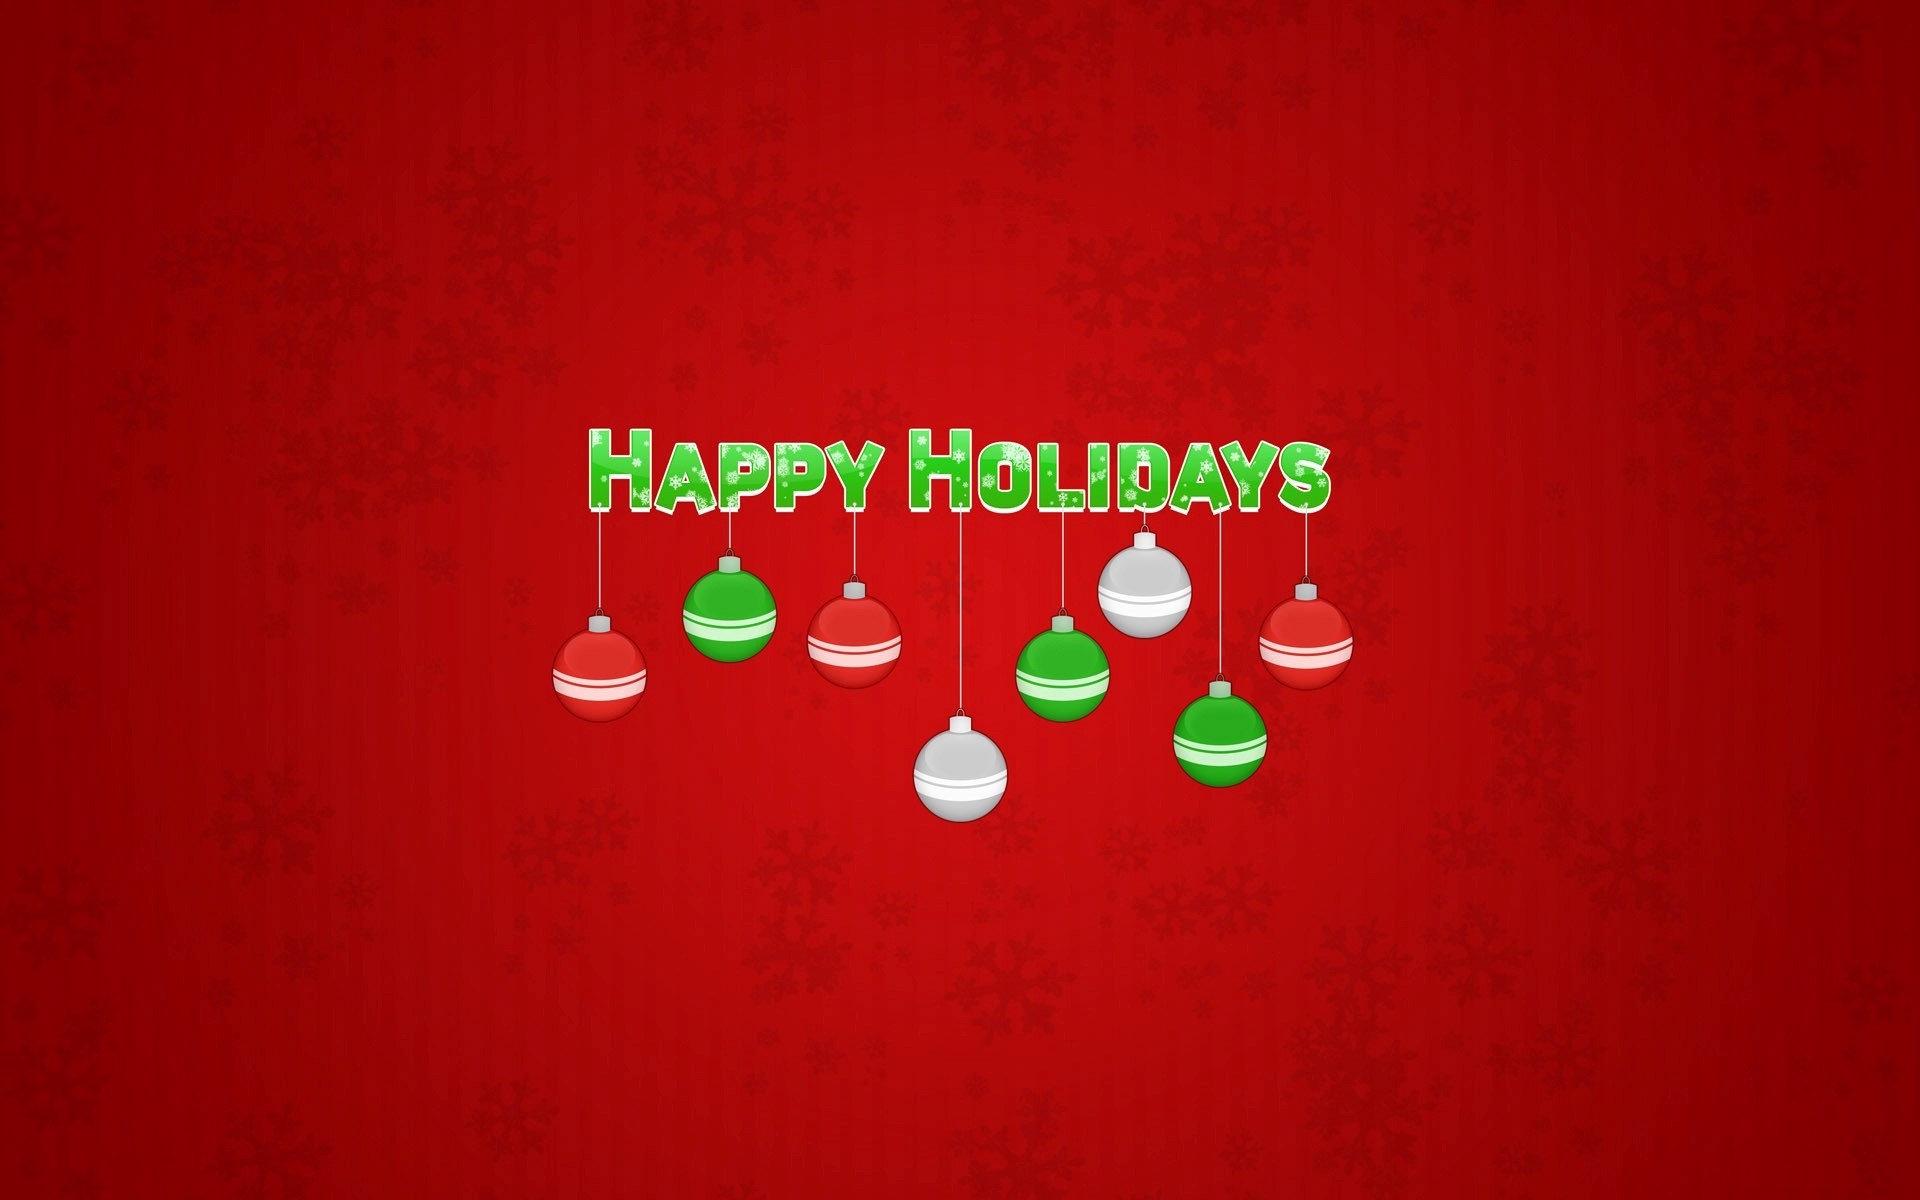 Happy Holidays Image On Christmas HD Wallpaper